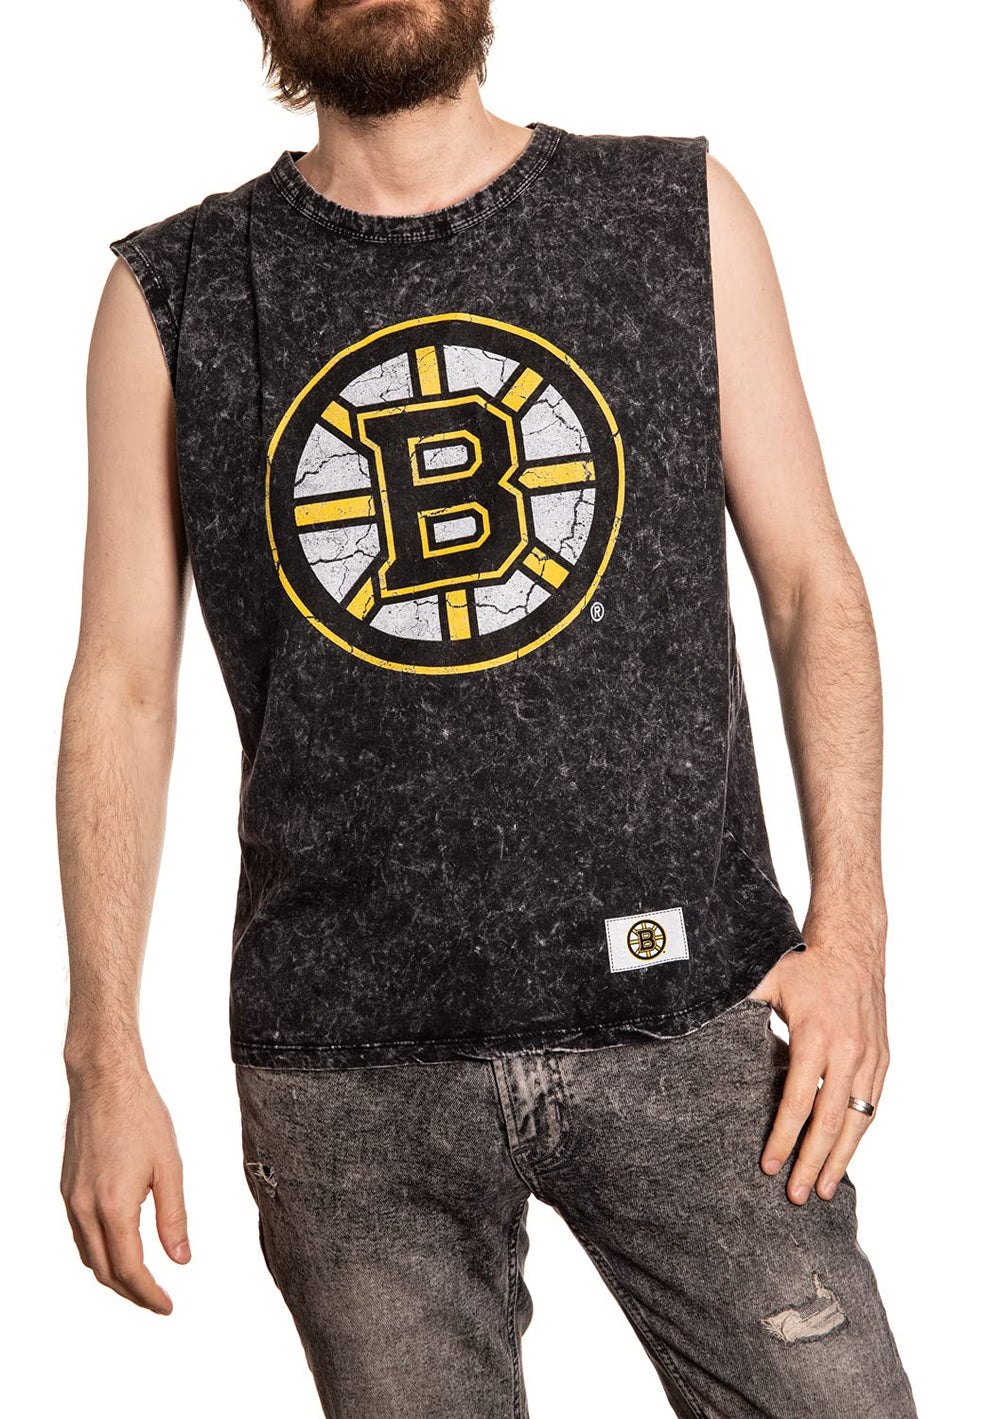 Boston Bruins Acid Wash Sleeveless Shirt Black Front View